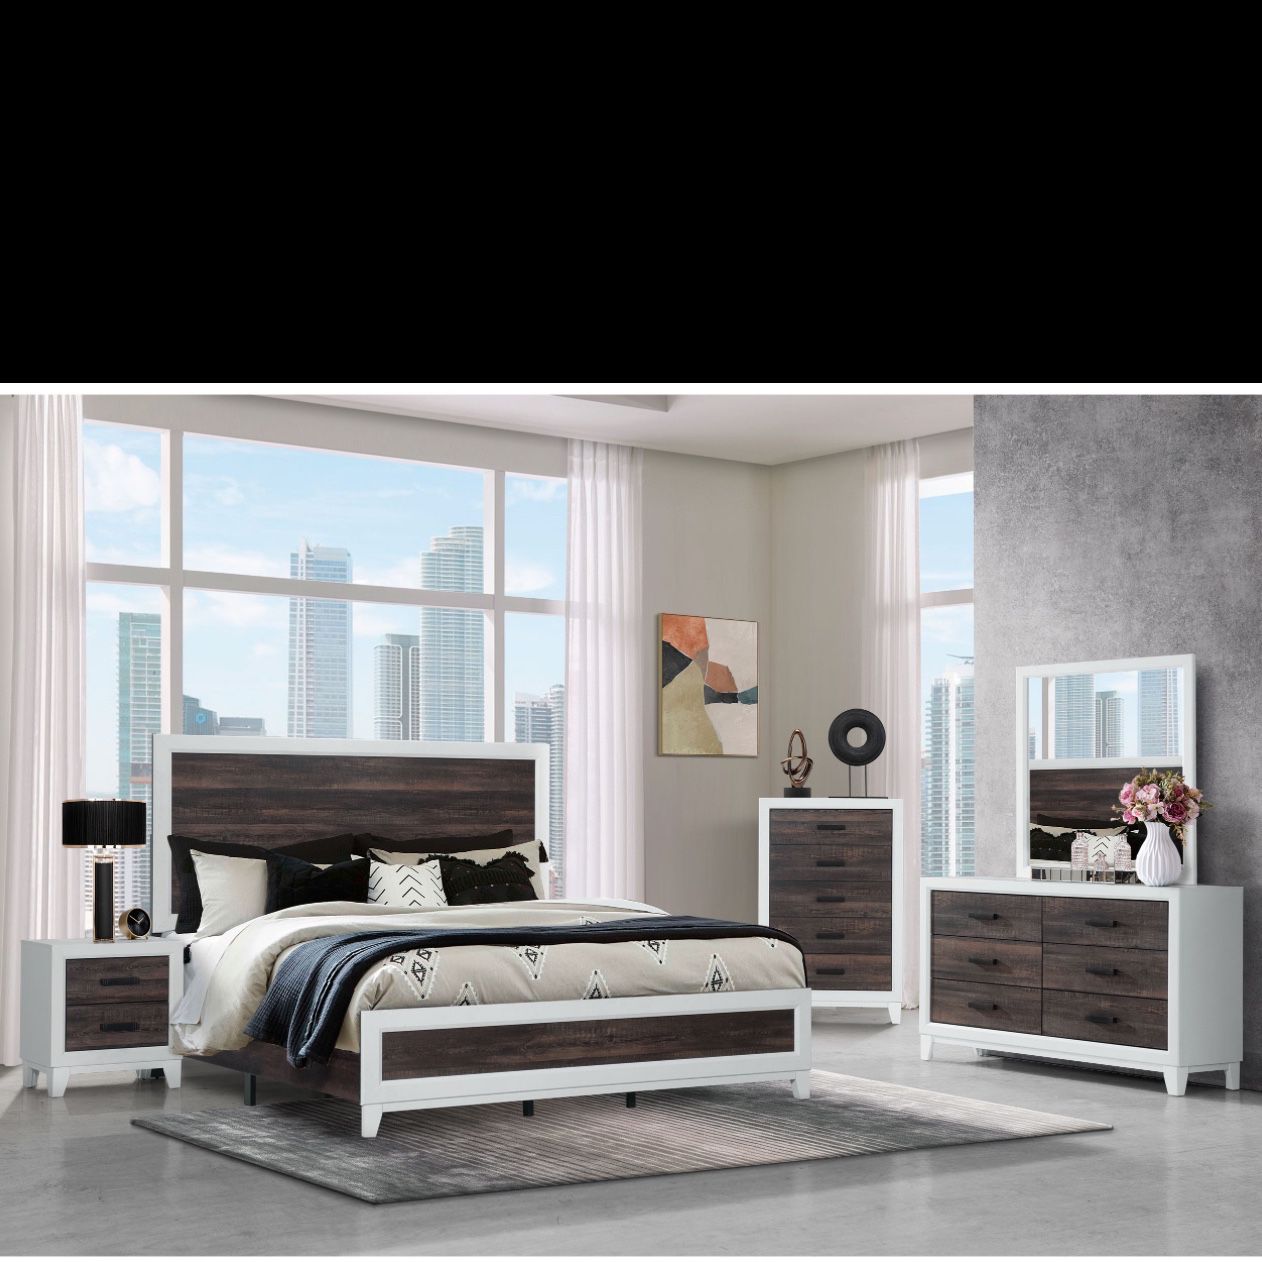 Brand New Complete Bedroom Set For $799